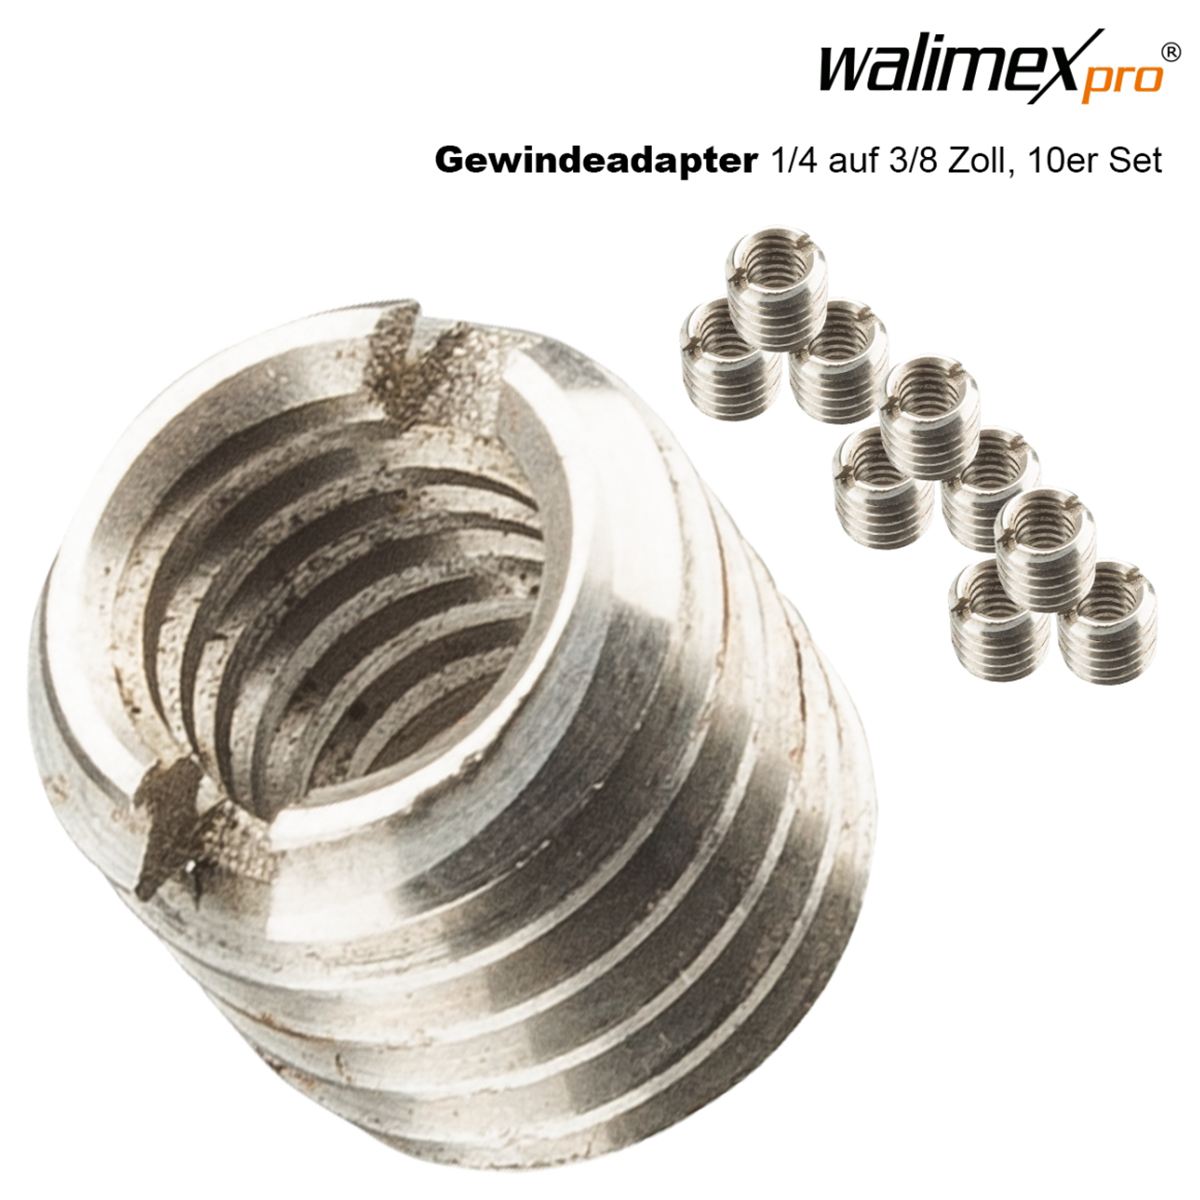 Walimex pro Gewindeadapter 1/4 - 3/8 Zoll, 10 Stck